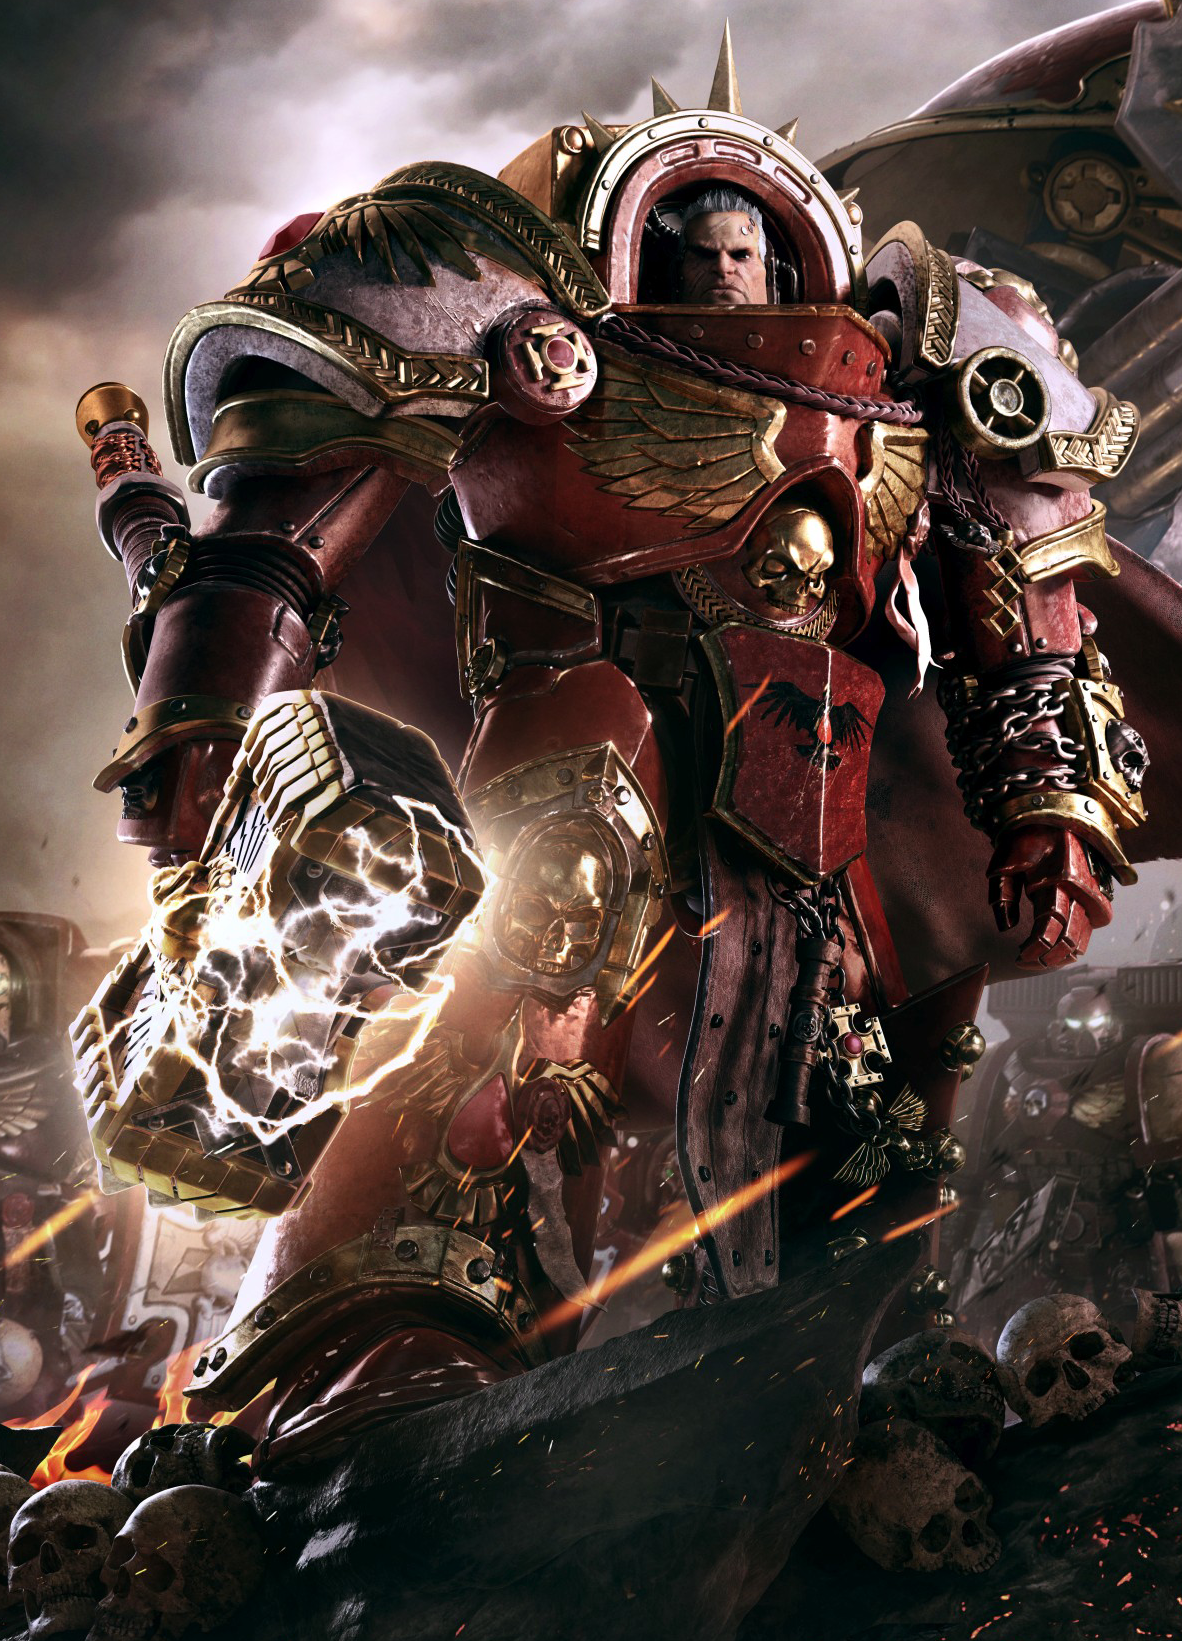 Who is Gabriel Angelos in Warhammer 40k?